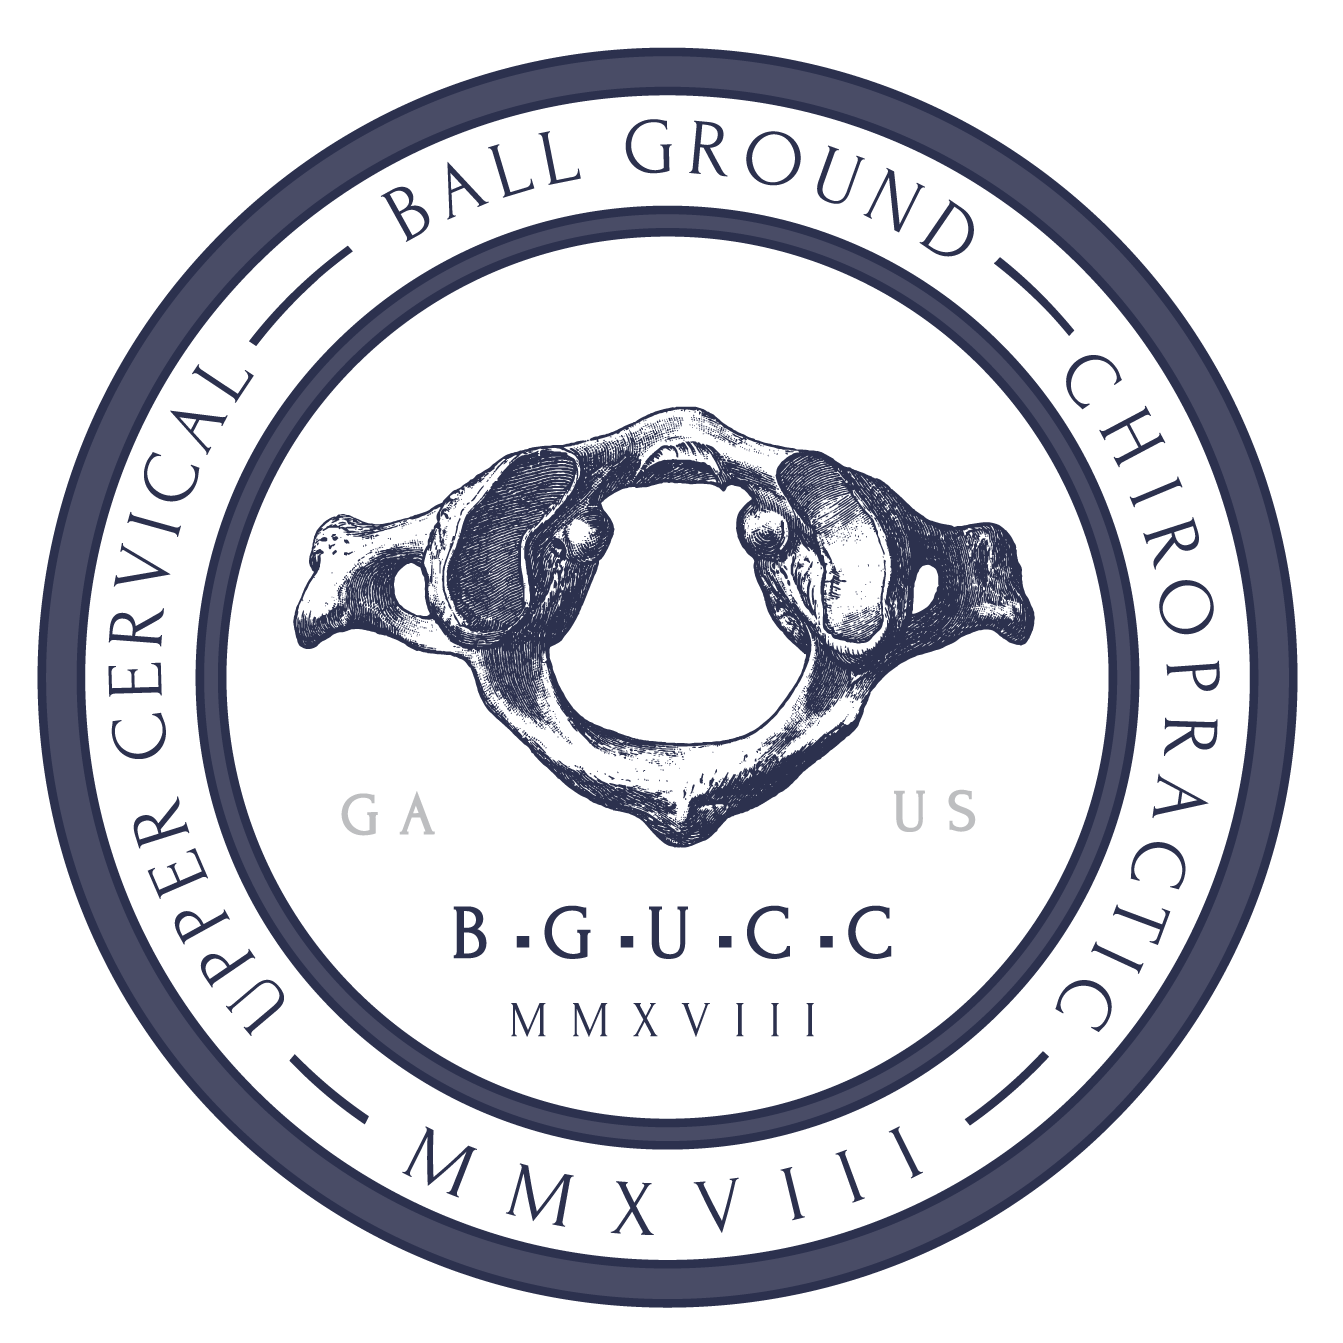 Ball Ground Upper Cervical Chiropractic round logo